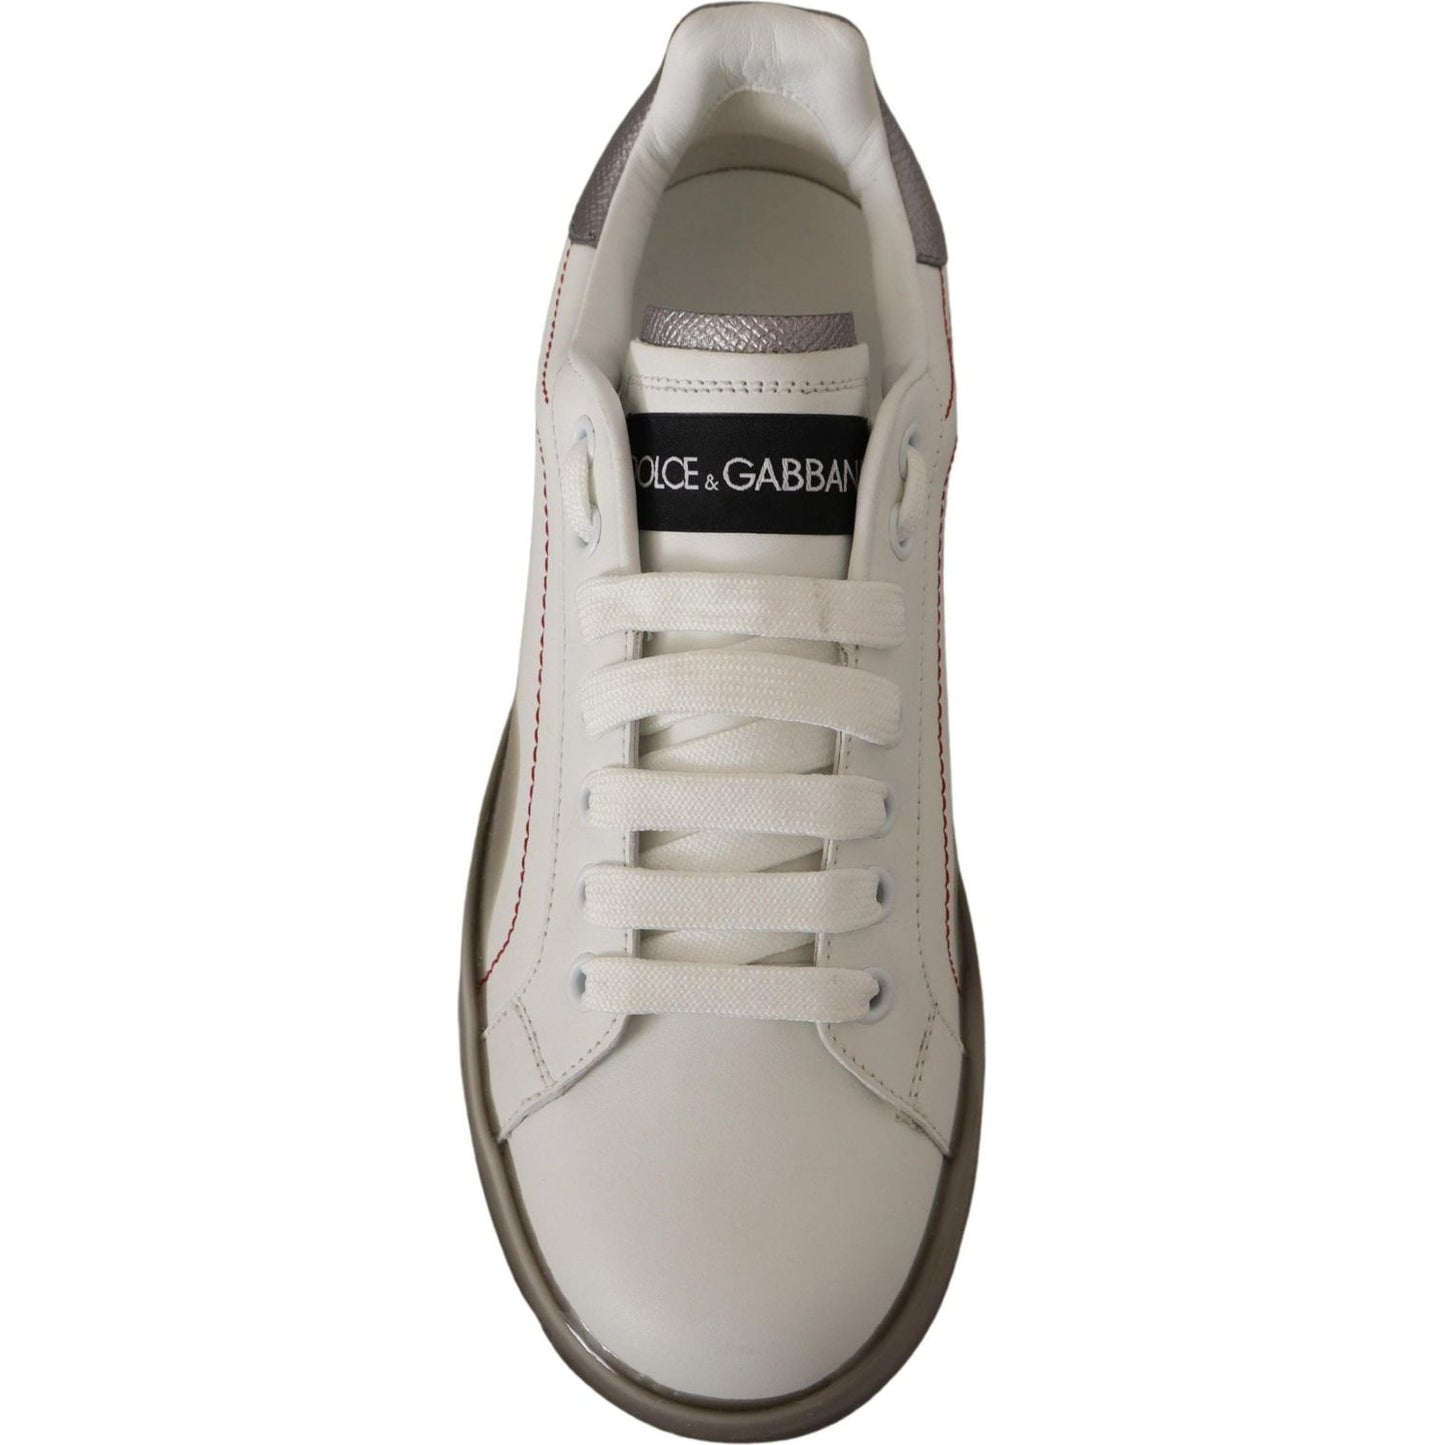 Dolce & Gabbana Elegant White Leather Sneakers white-leather-shoes-womens-logo-portofino-sneakers